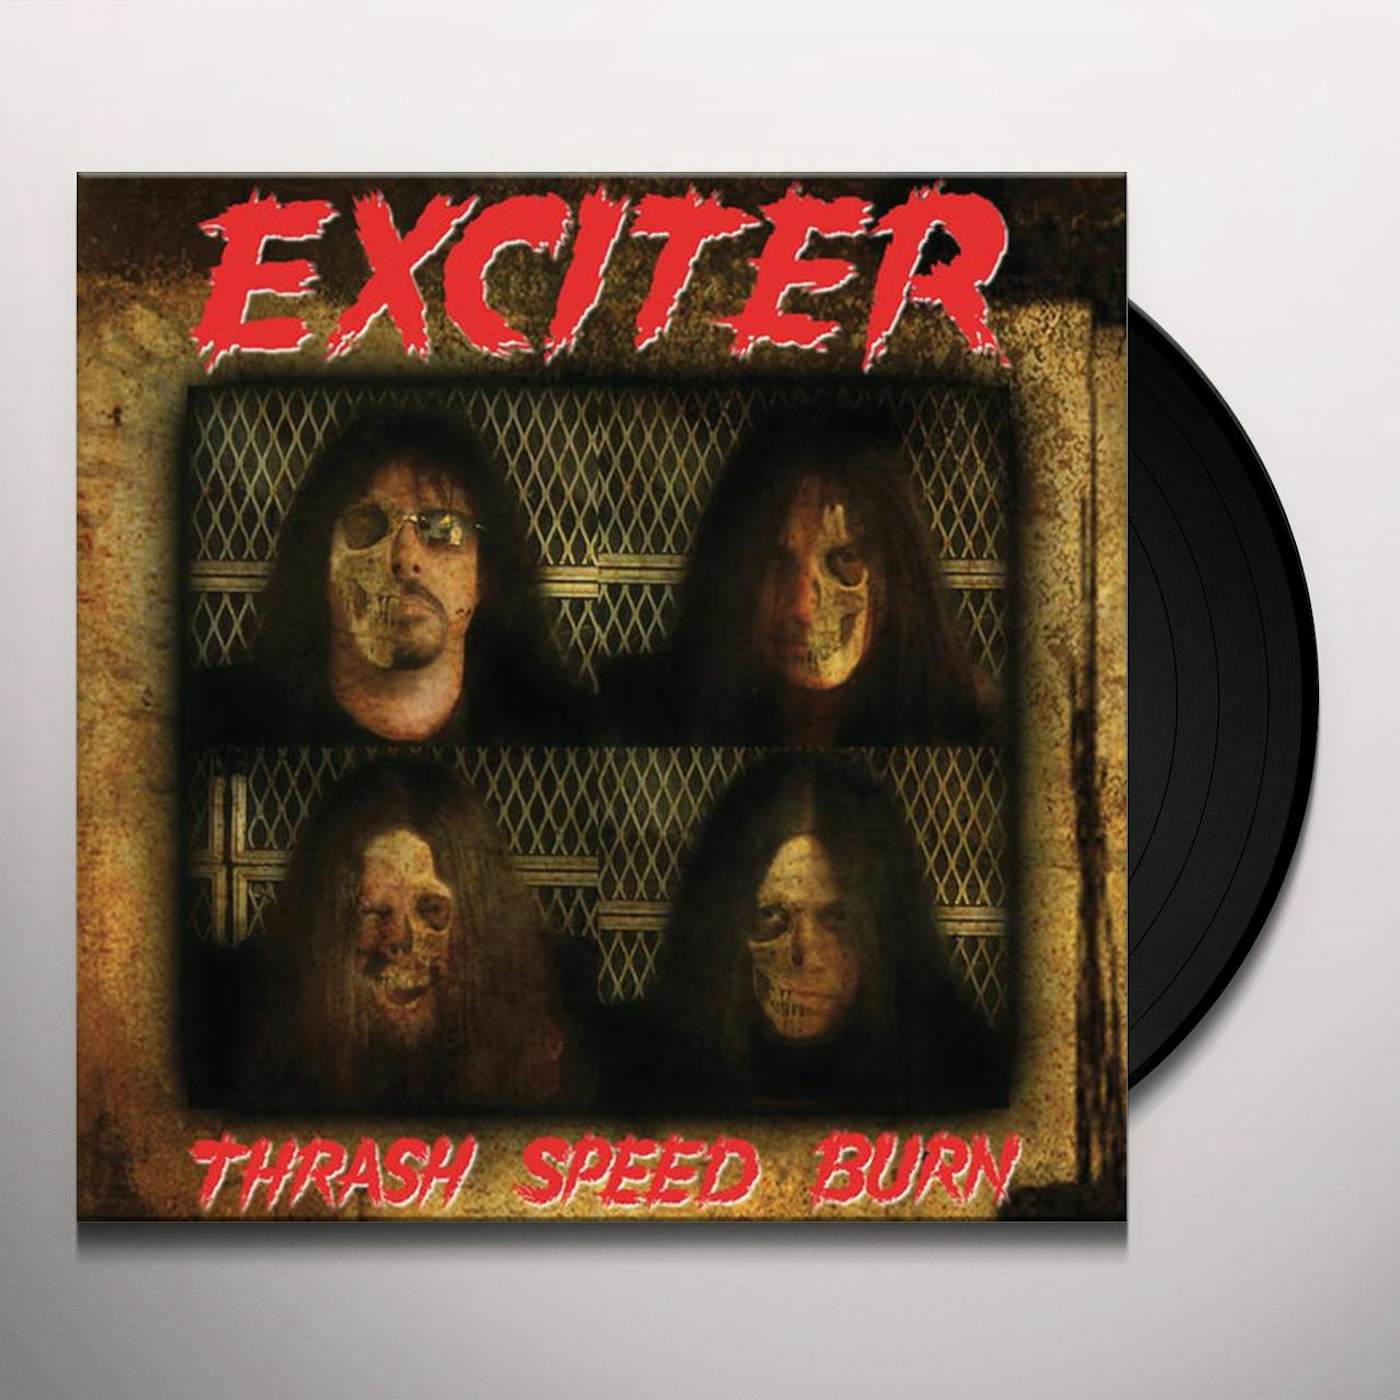 Exciter Thrash Speed Burn Vinyl Record